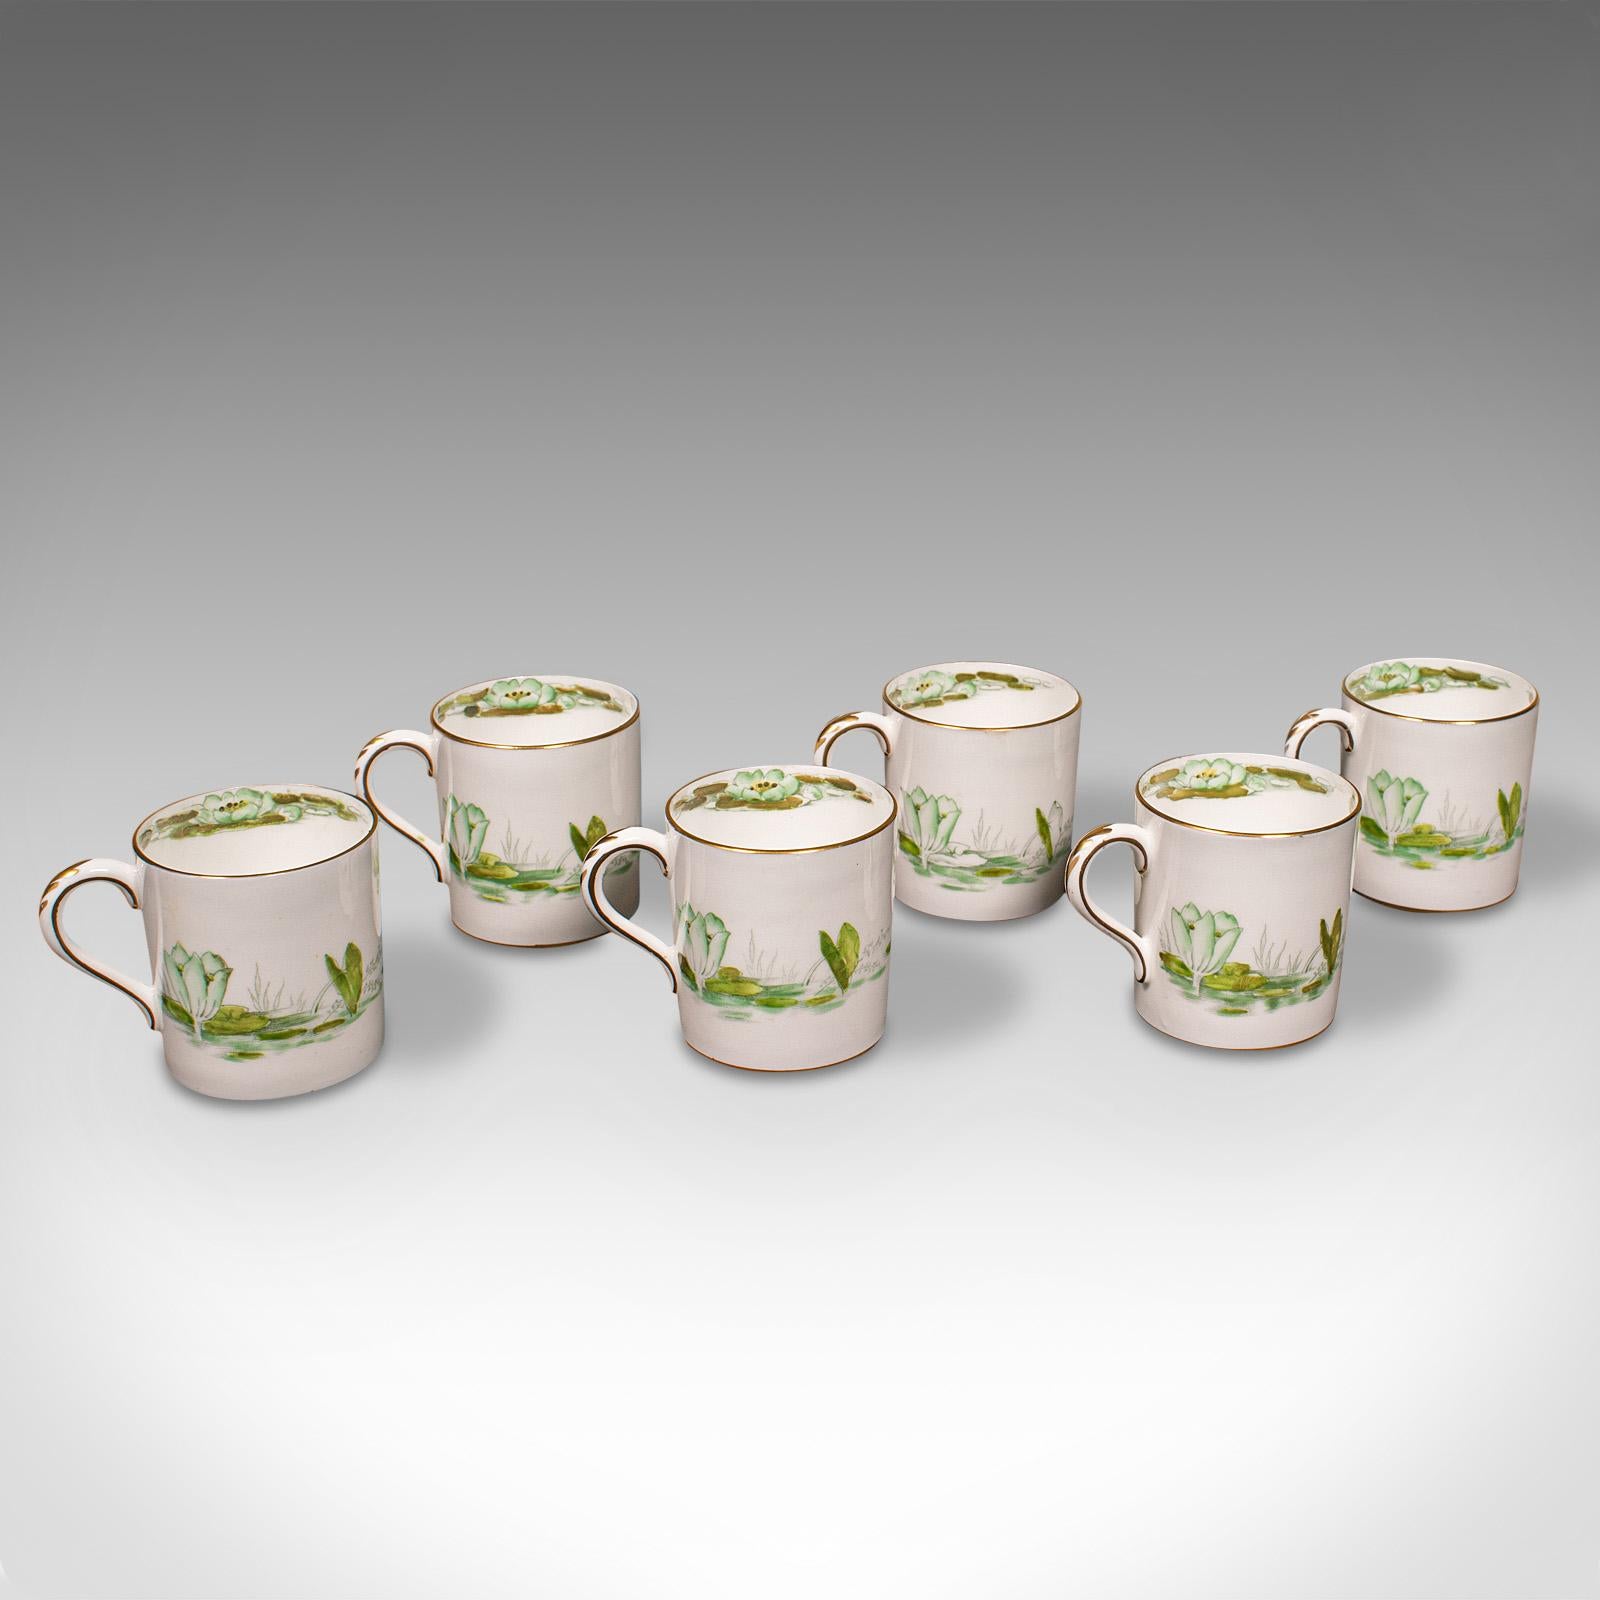 Vintage Cased Tea Set, English Ceramic, Coffee Cans, Silver Spoon, Hallmark 1932 For Sale 2